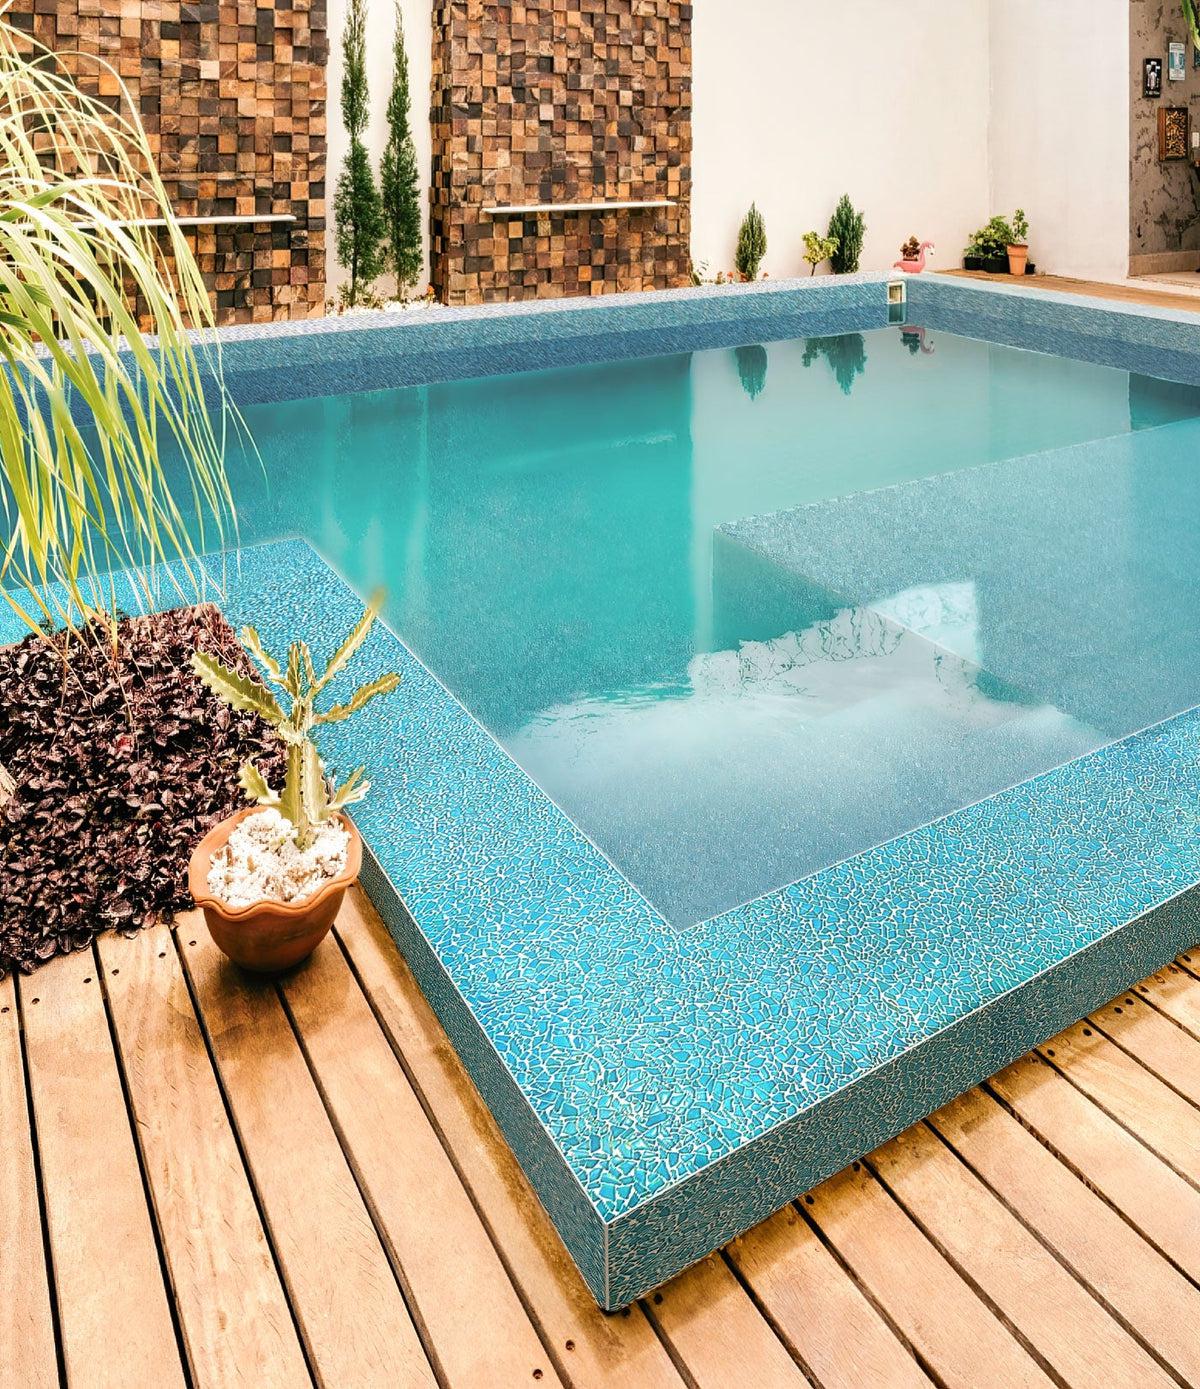 Openair Pool Tiled with Diamond Blue Glass Pebble Mosaic Tile